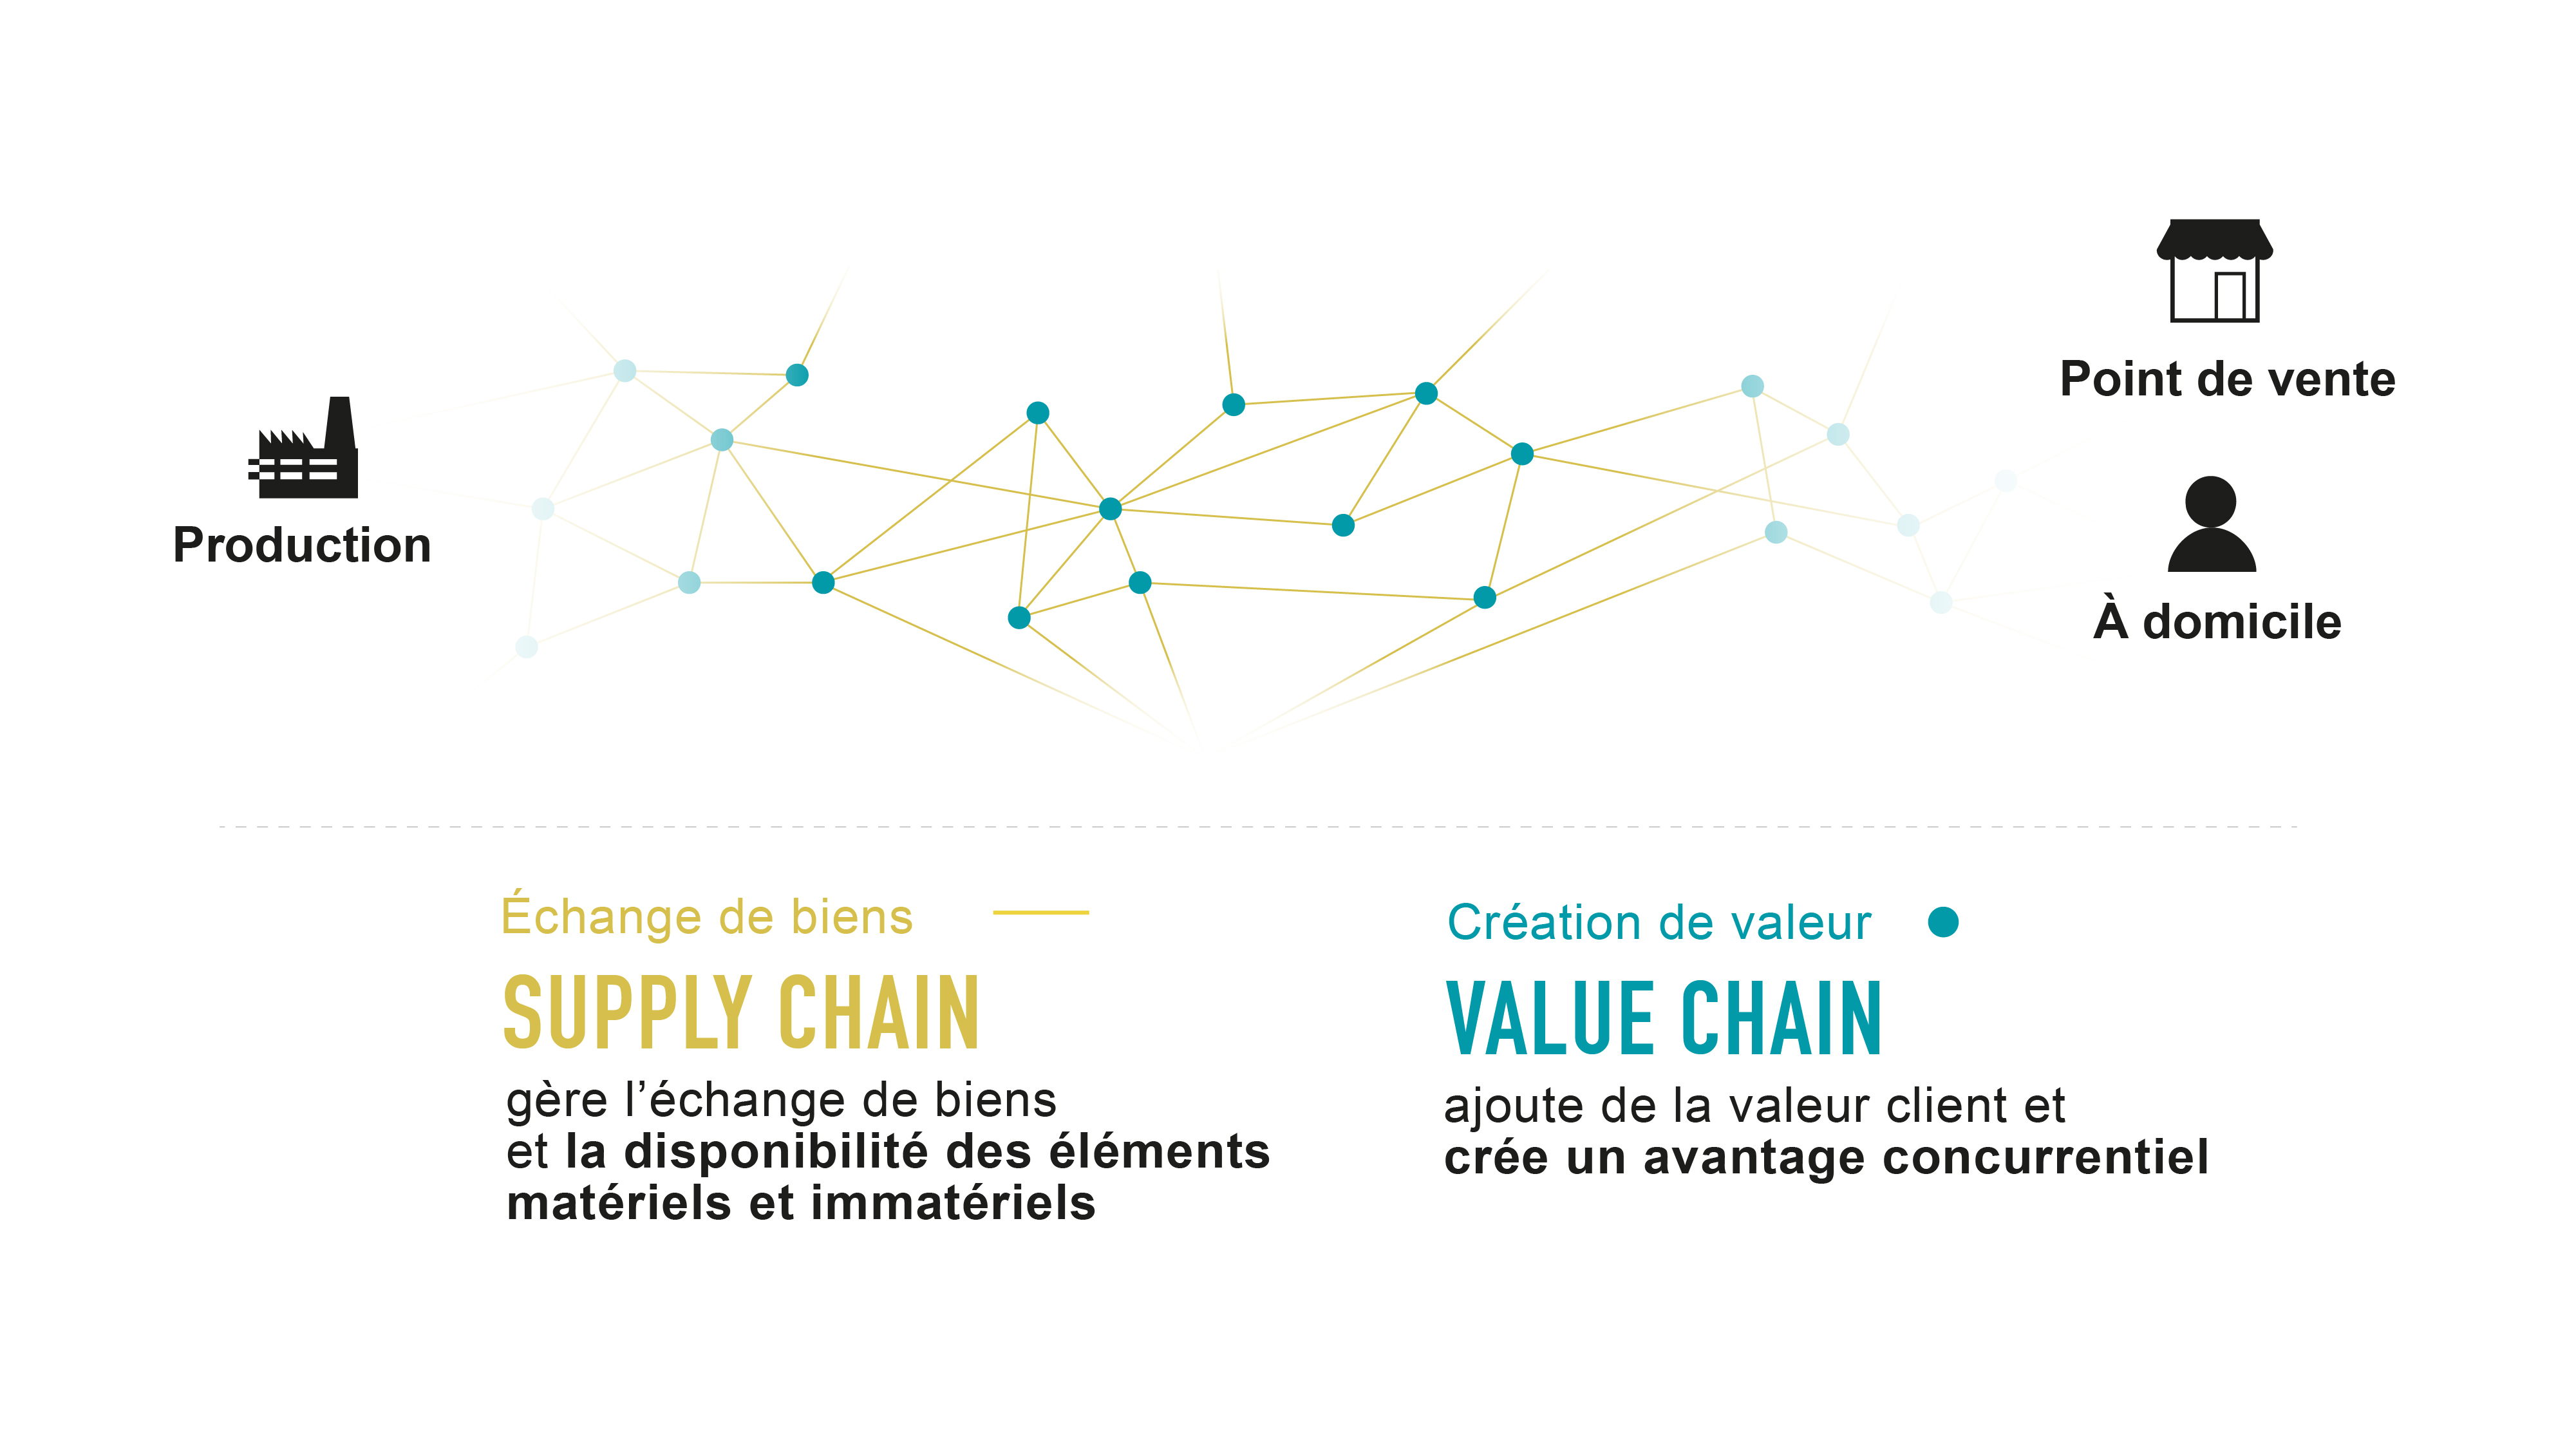 Value Chain vs Supply Chain